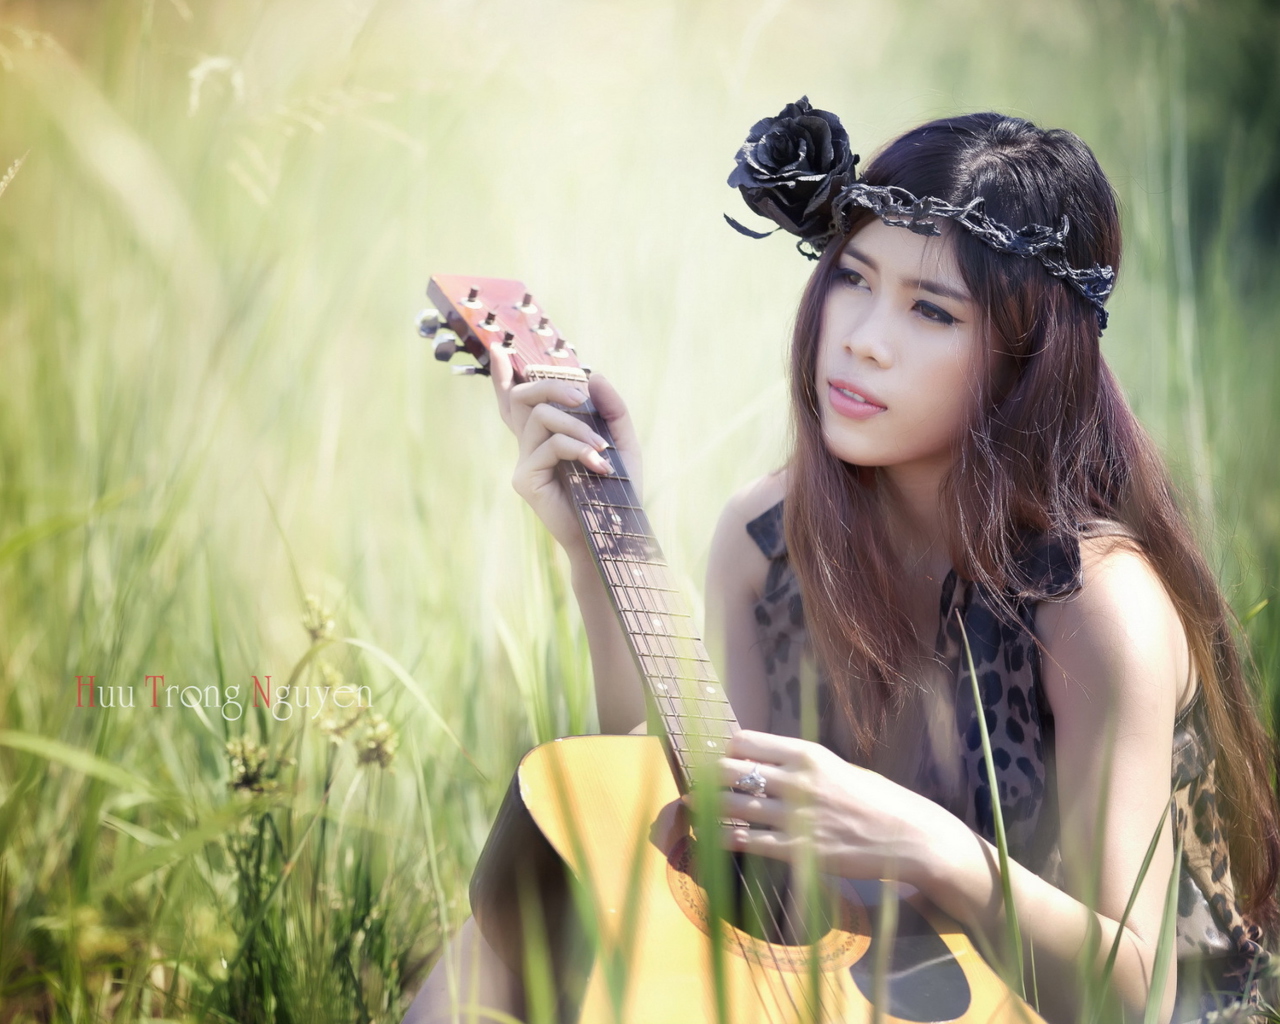 Pretty Girl In Grass Playing Guitar wallpaper 1280x1024